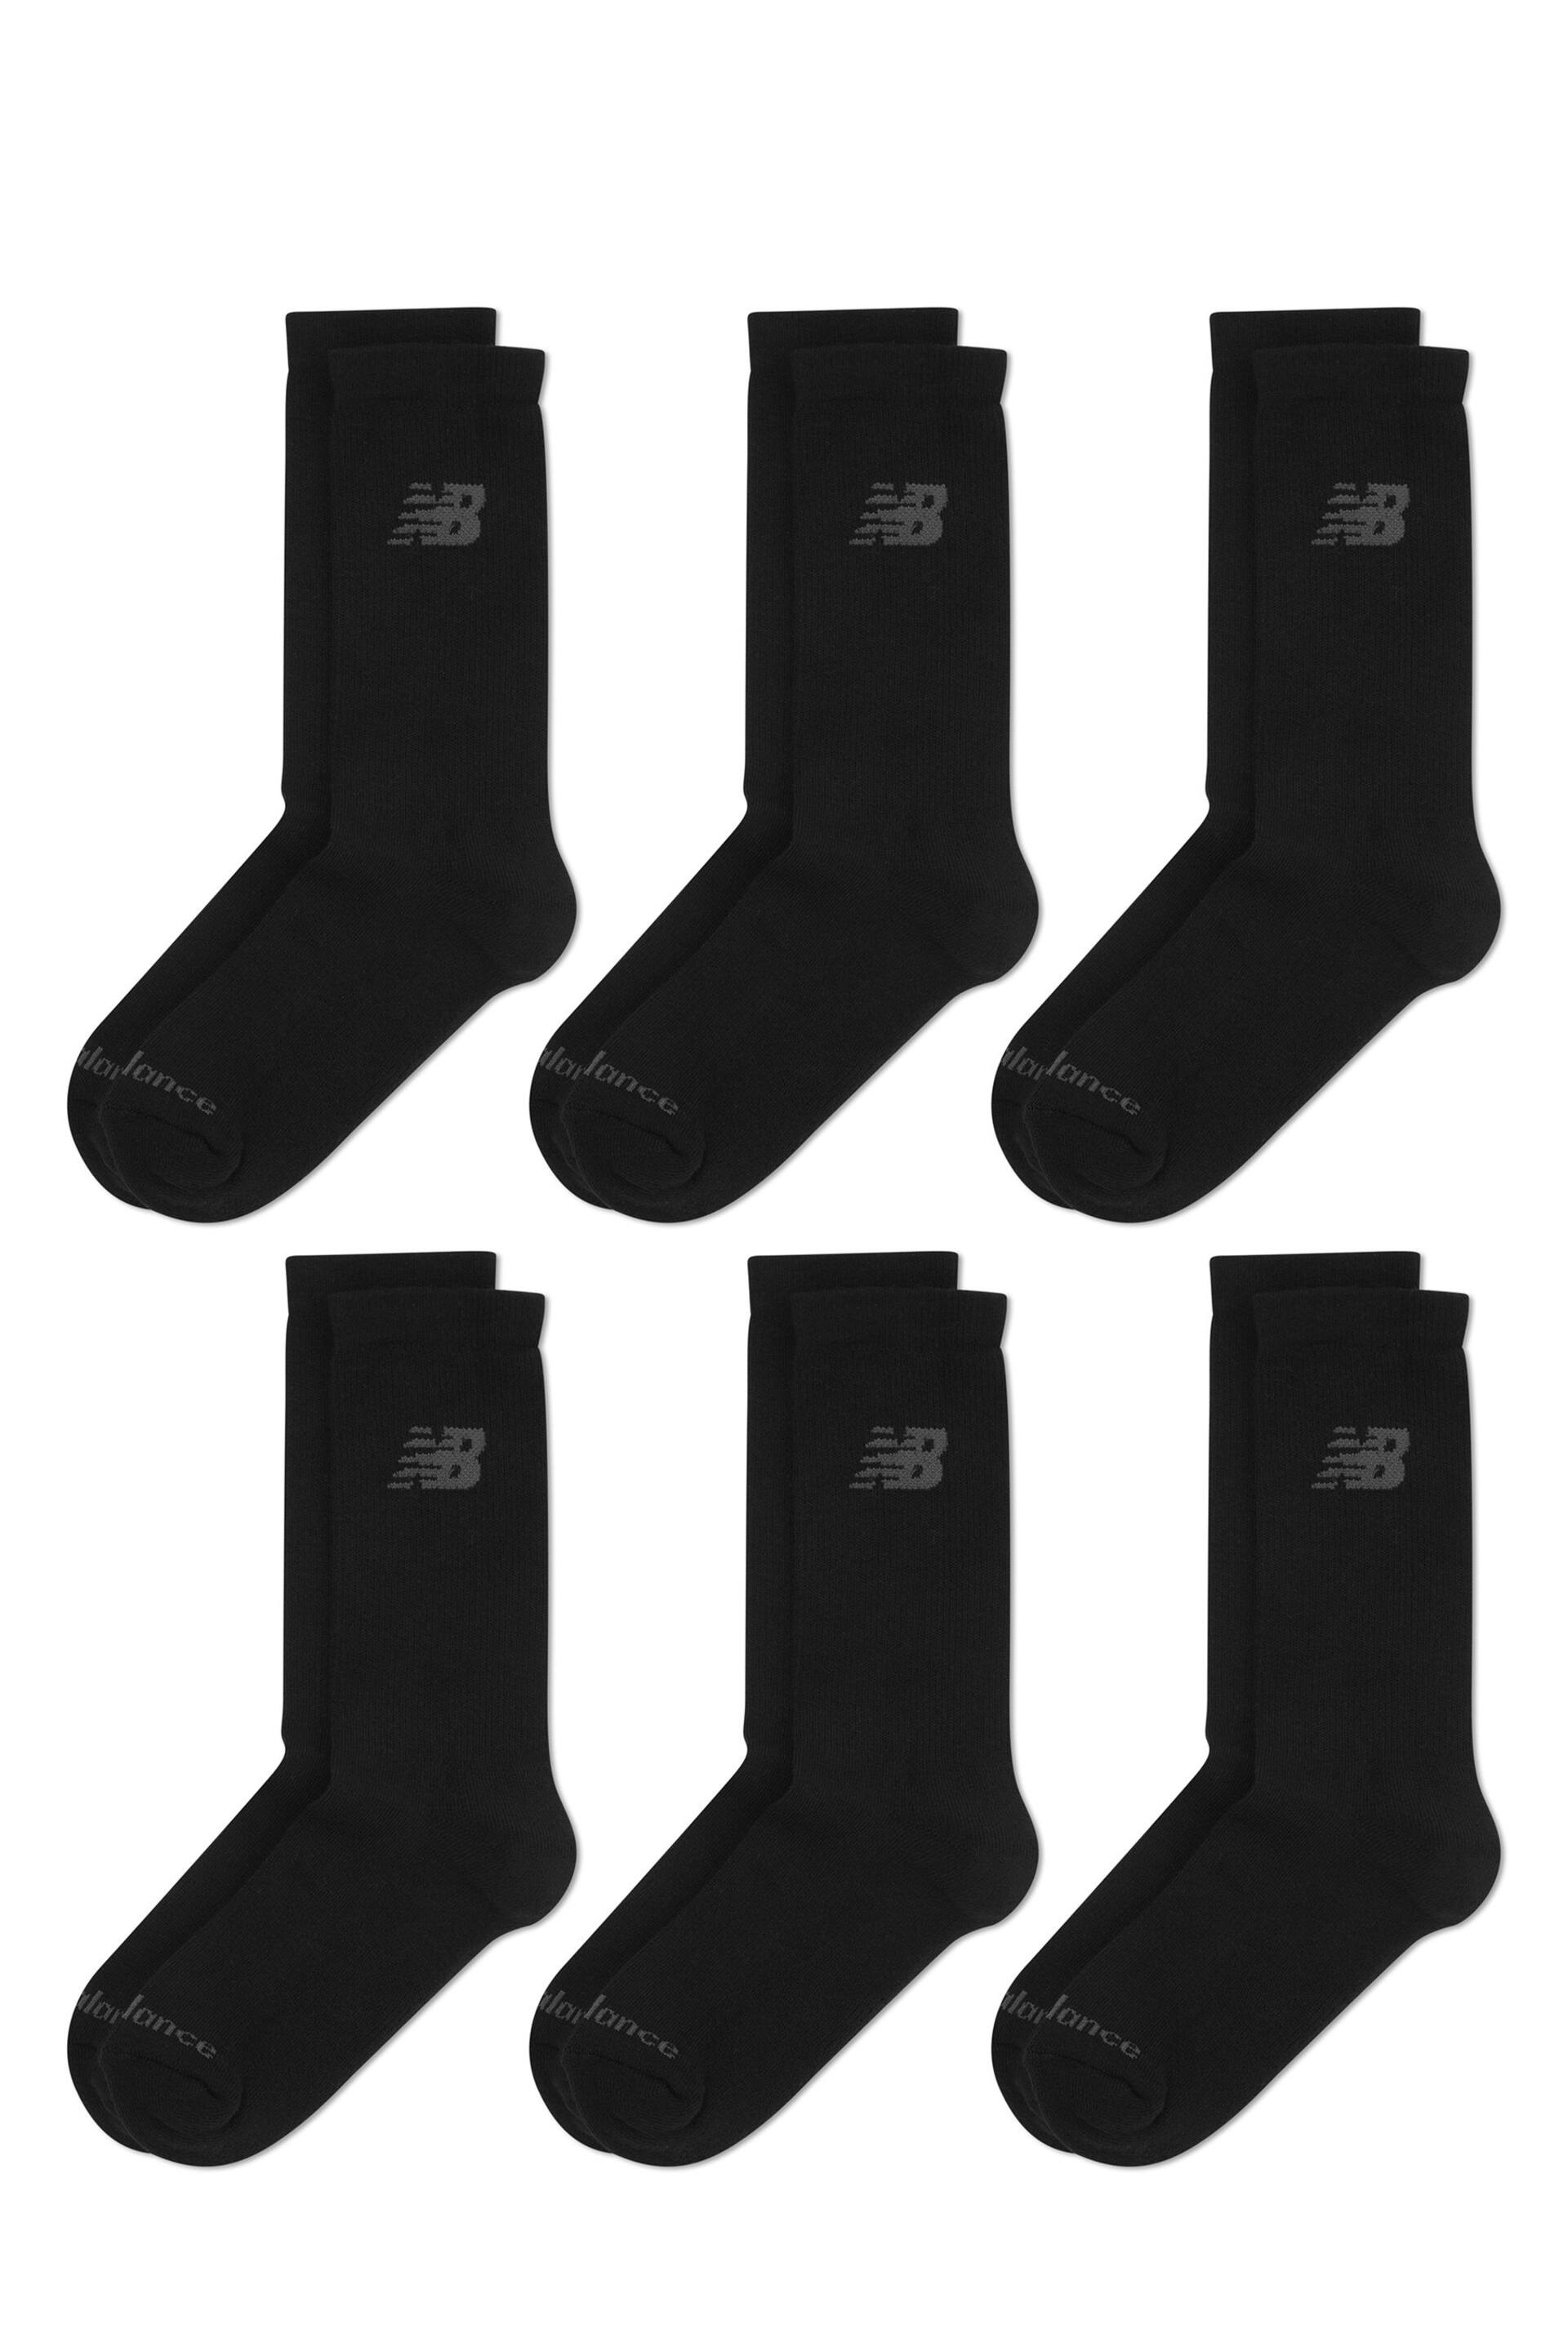 New Balance Black Multipack Sports Cushioned Crew Socks - Image 1 of 3